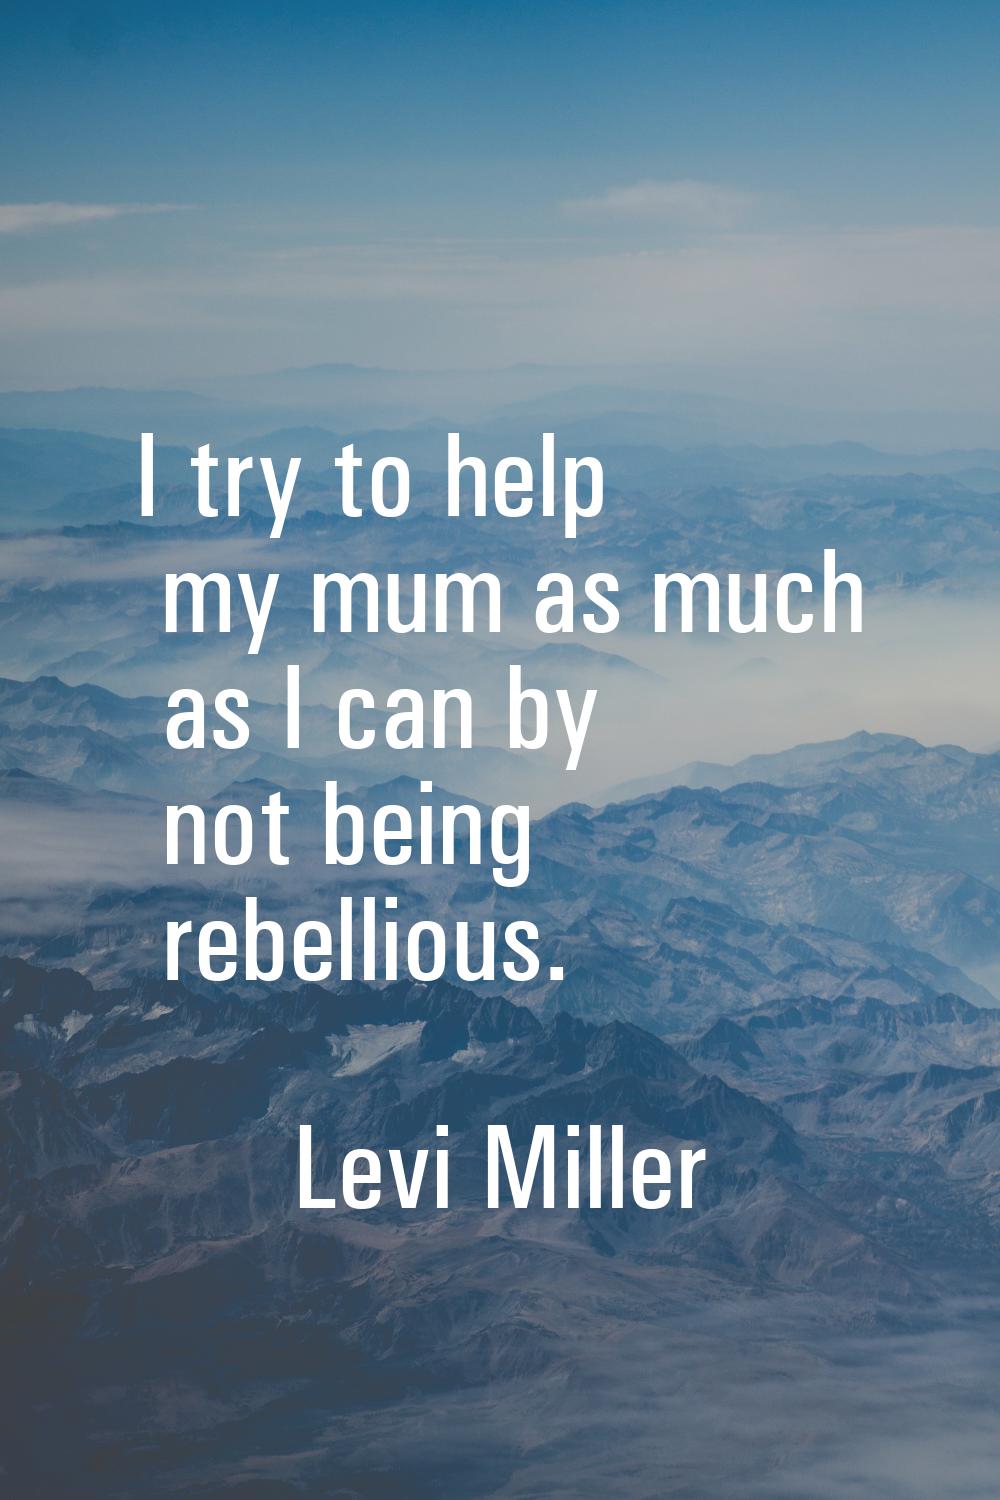 I try to help my mum as much as I can by not being rebellious.